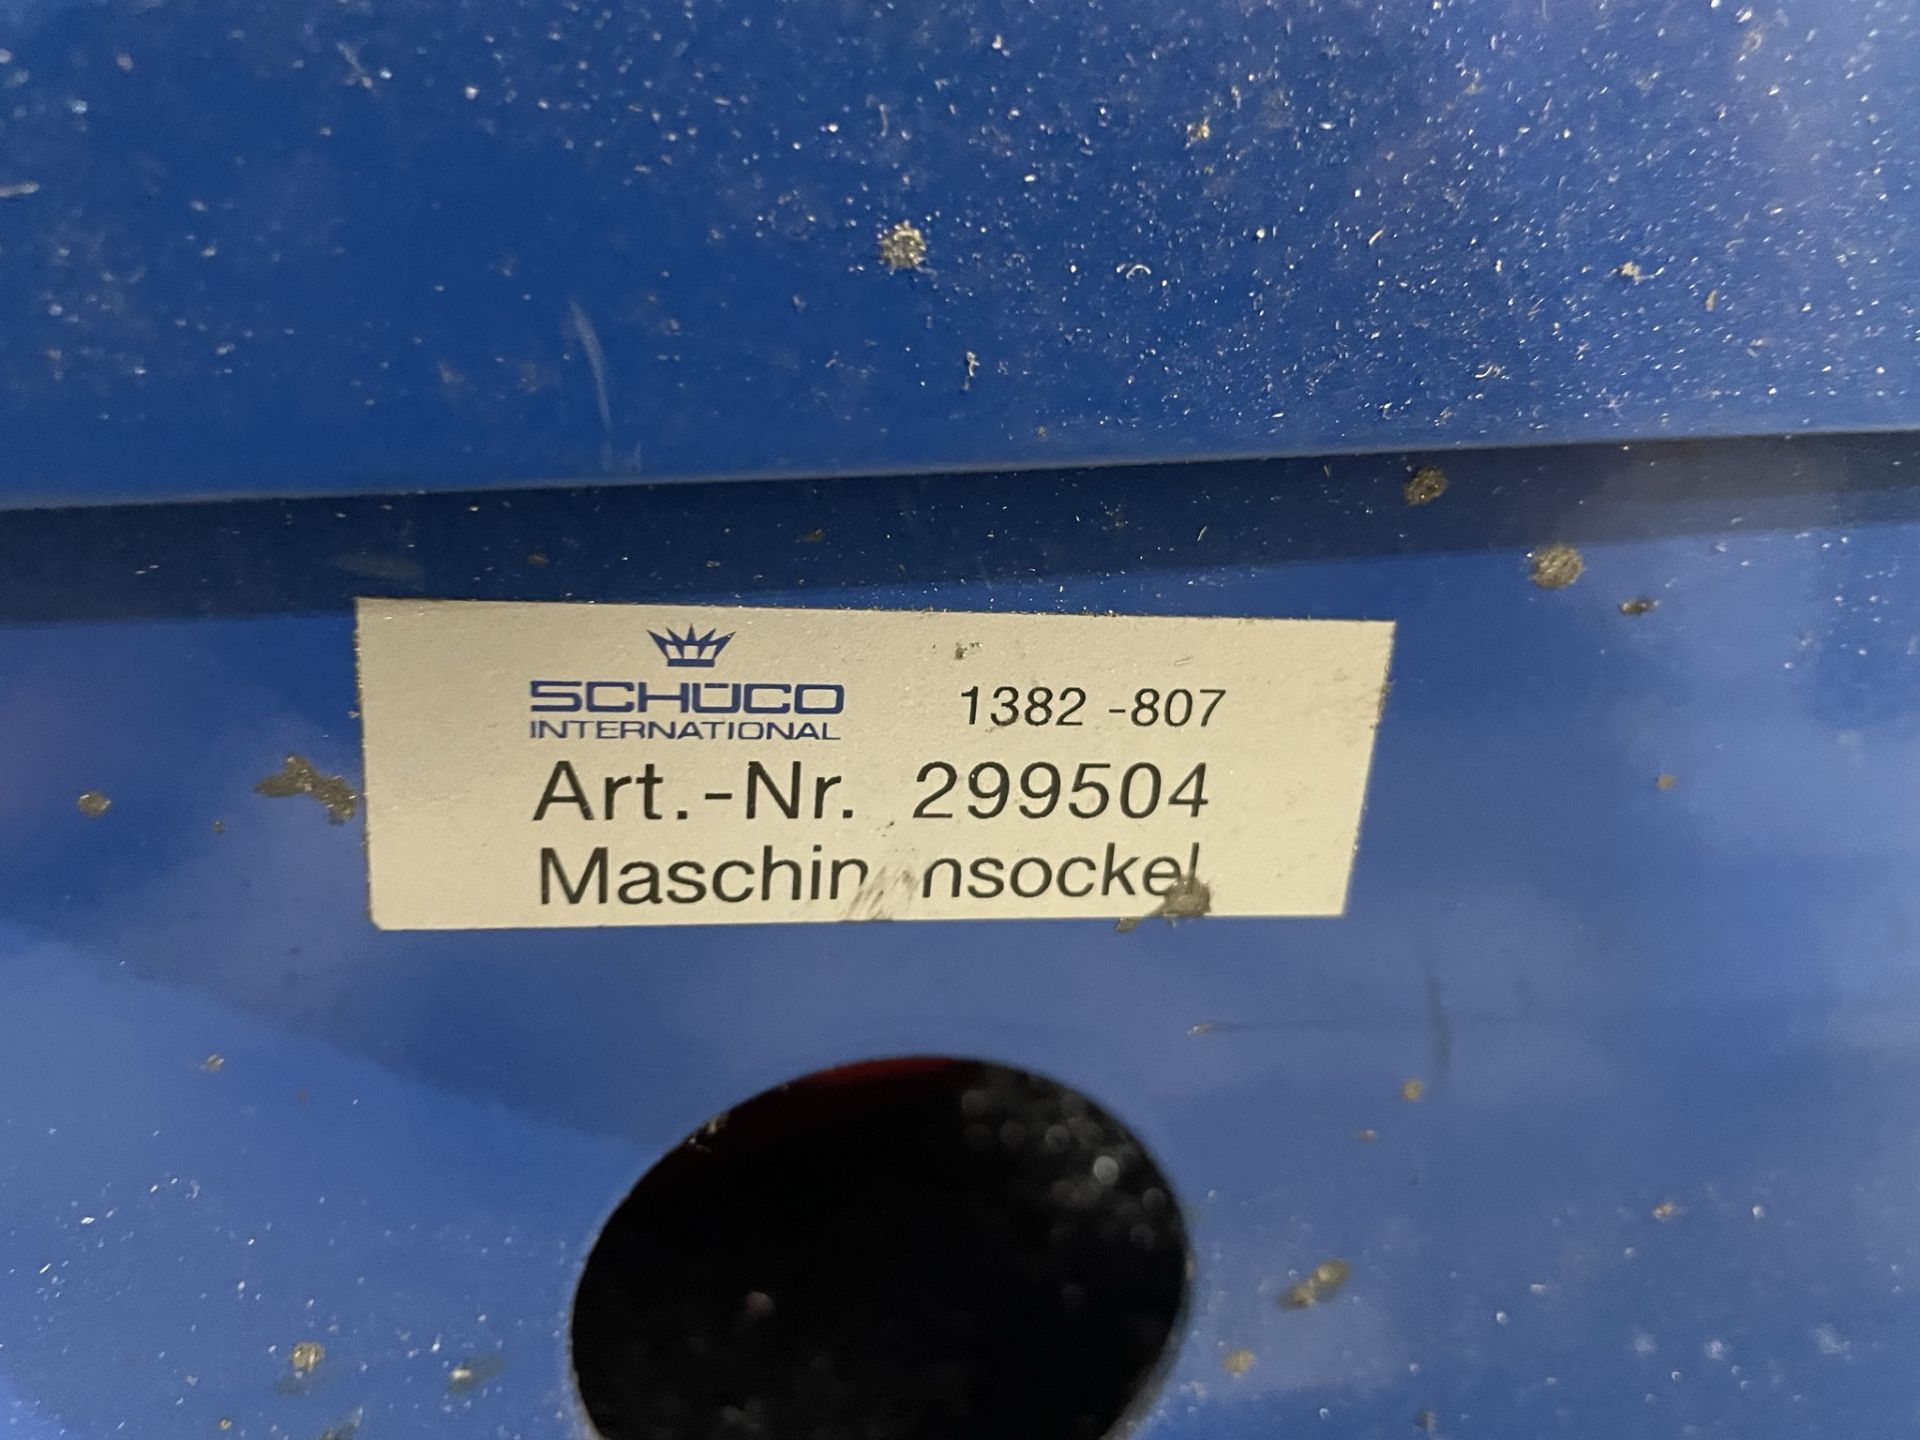 Schuco, 1382-807 pneumatic press, Serial No. 299504 - Image 3 of 3